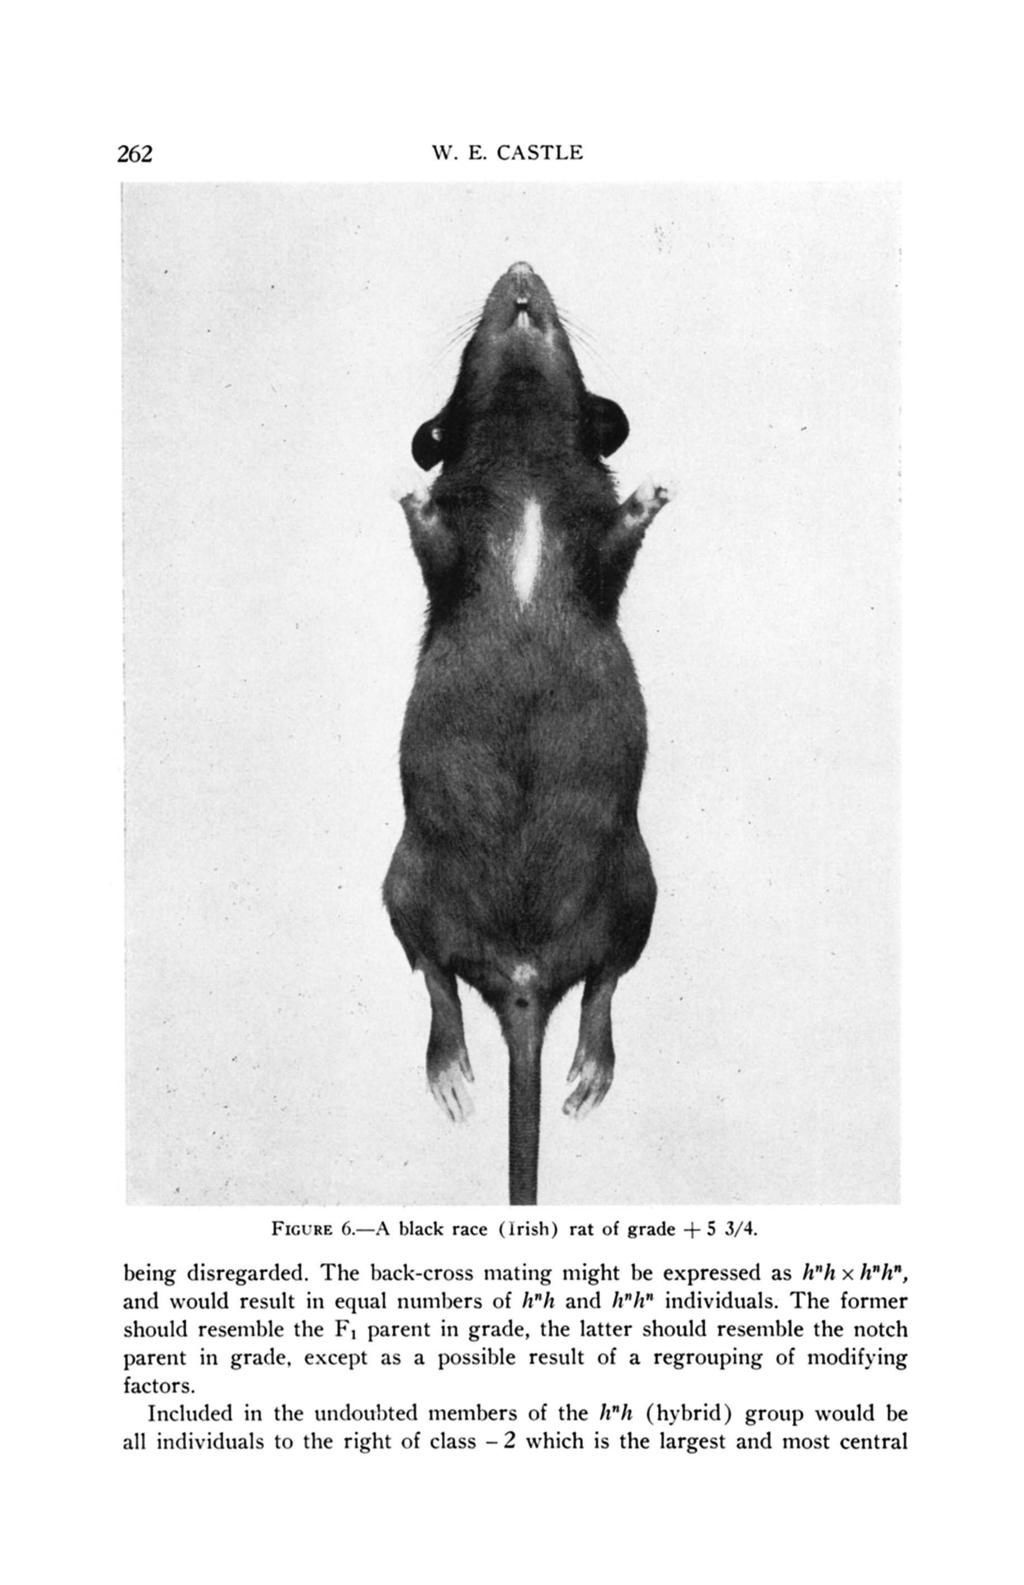 262 W. E. CASTLE FIGURE 6.-A black race (Irish) rat of grade + 5 3/4. being disregarded.